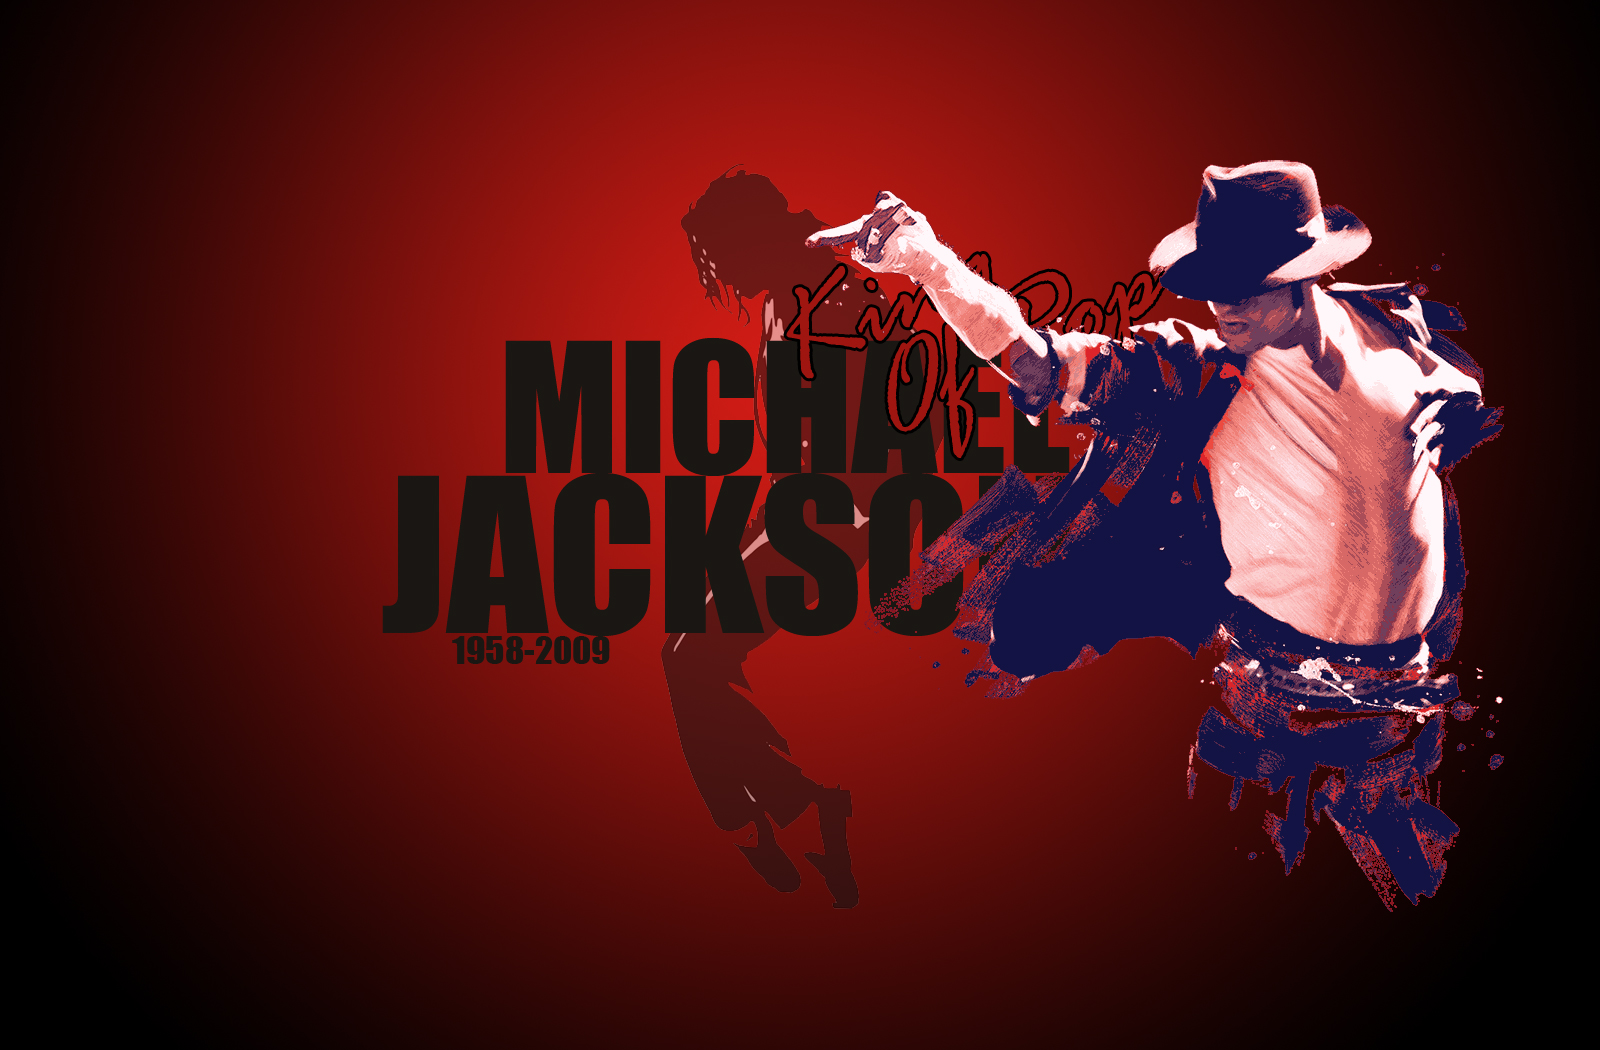 Michael Jackson Wallpapers HD A23